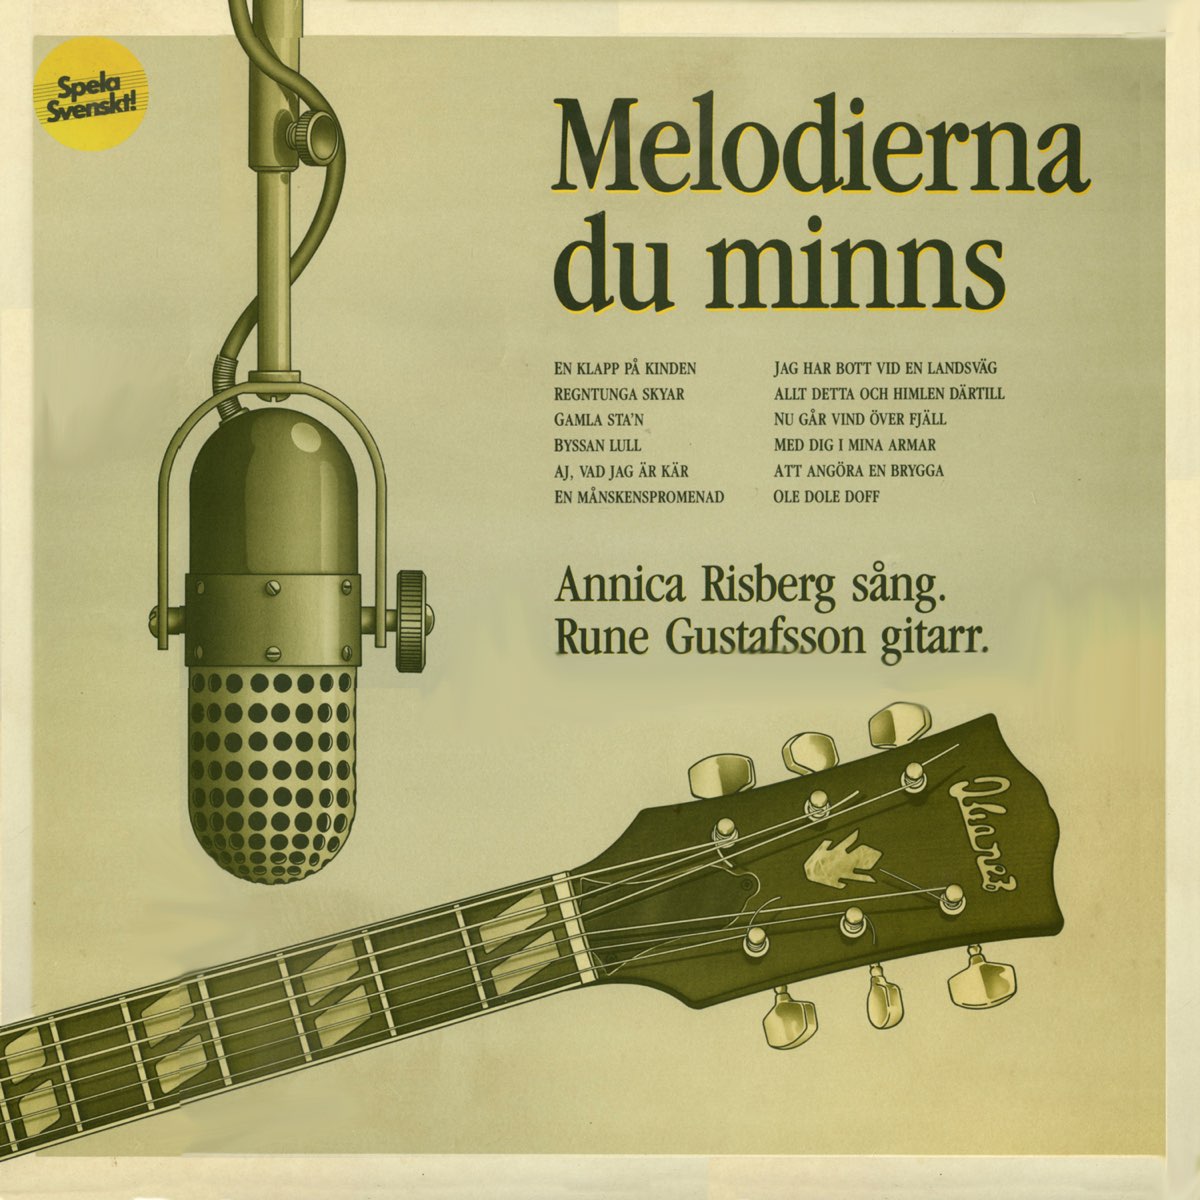 Melodierna du minns - Album by Annica Risberg & Rune Gustafsson - Apple  Music